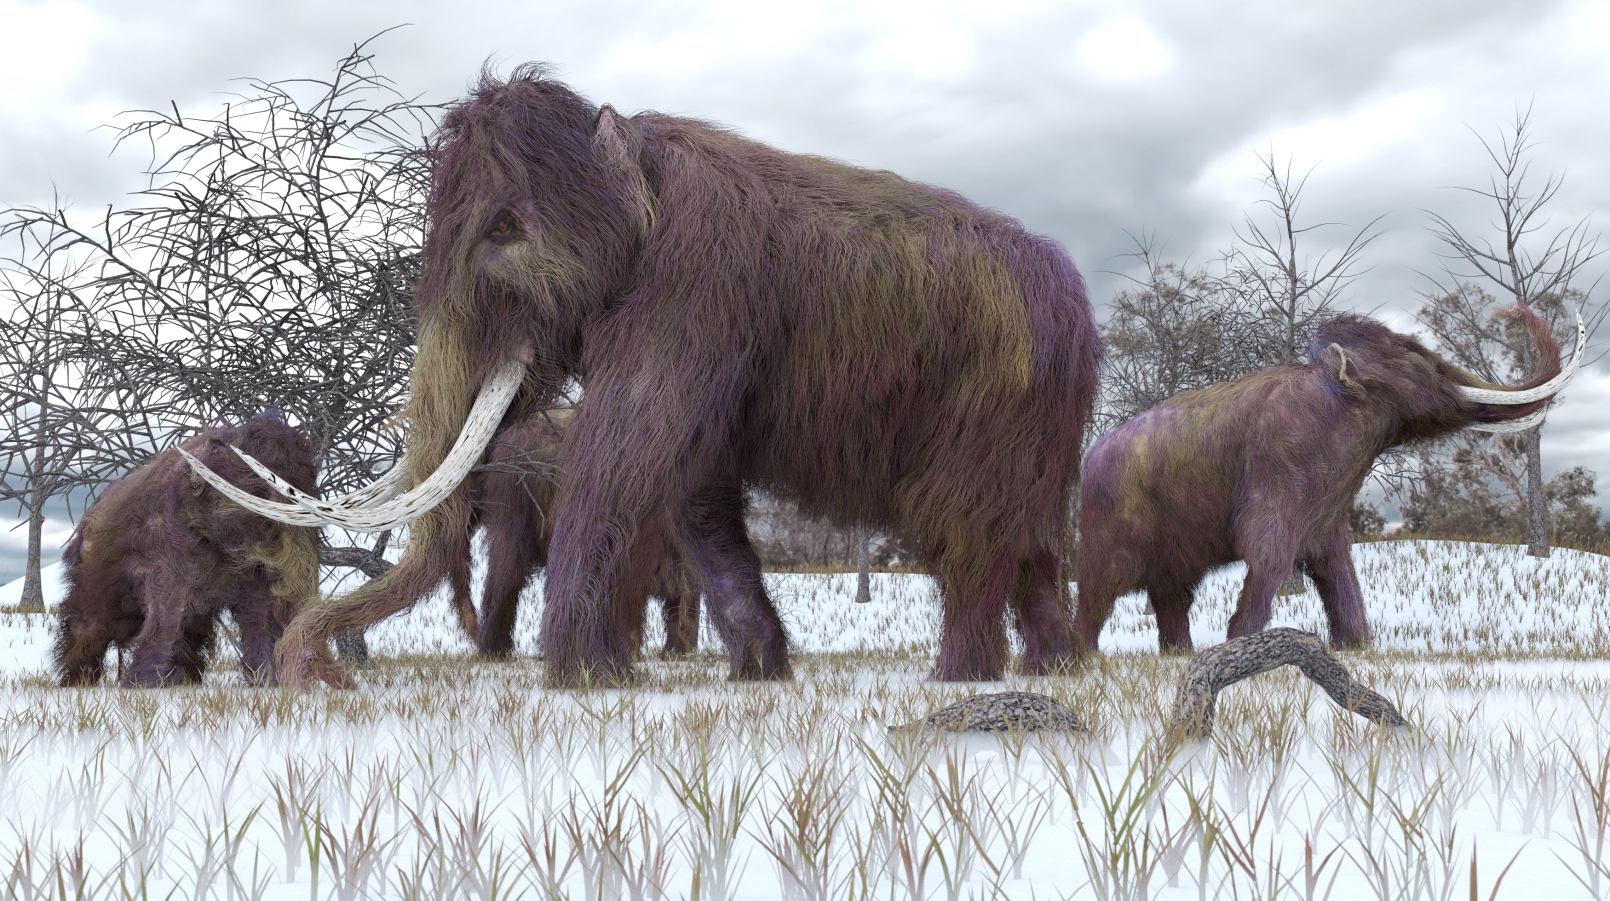 Illustration of a herd of woolly mammoths by AuntSpray via shutterstock.com